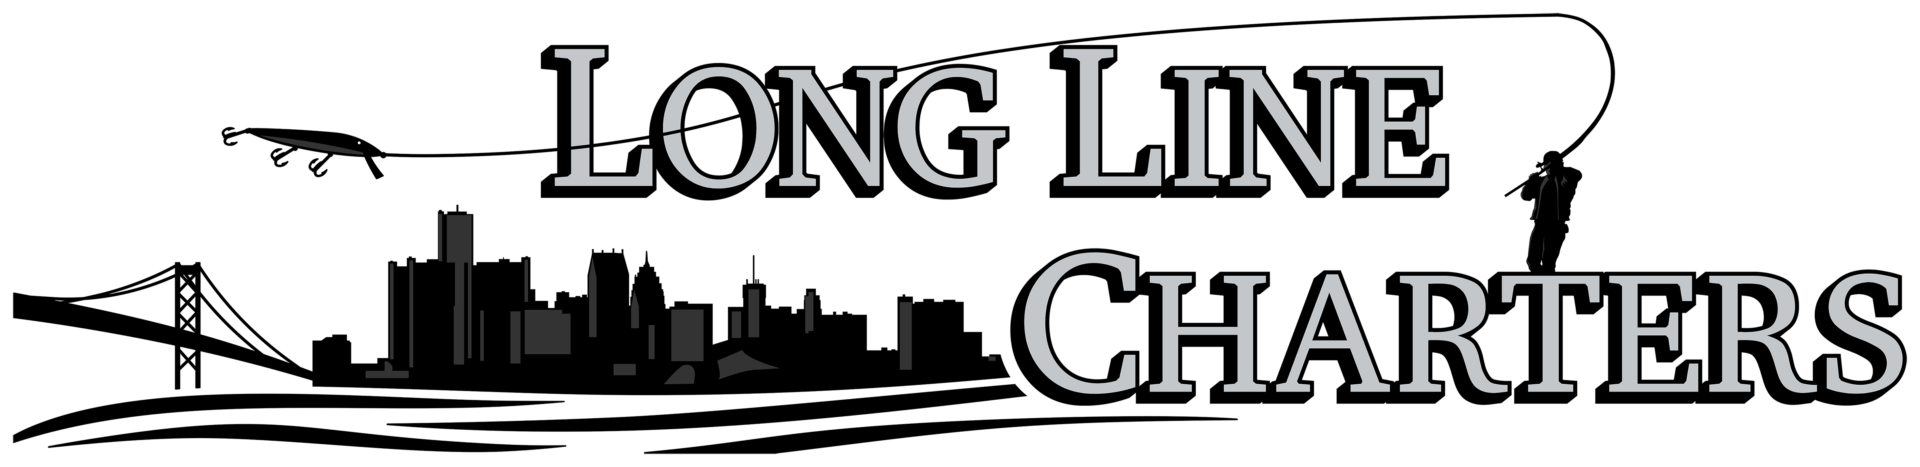 Long Line Charters